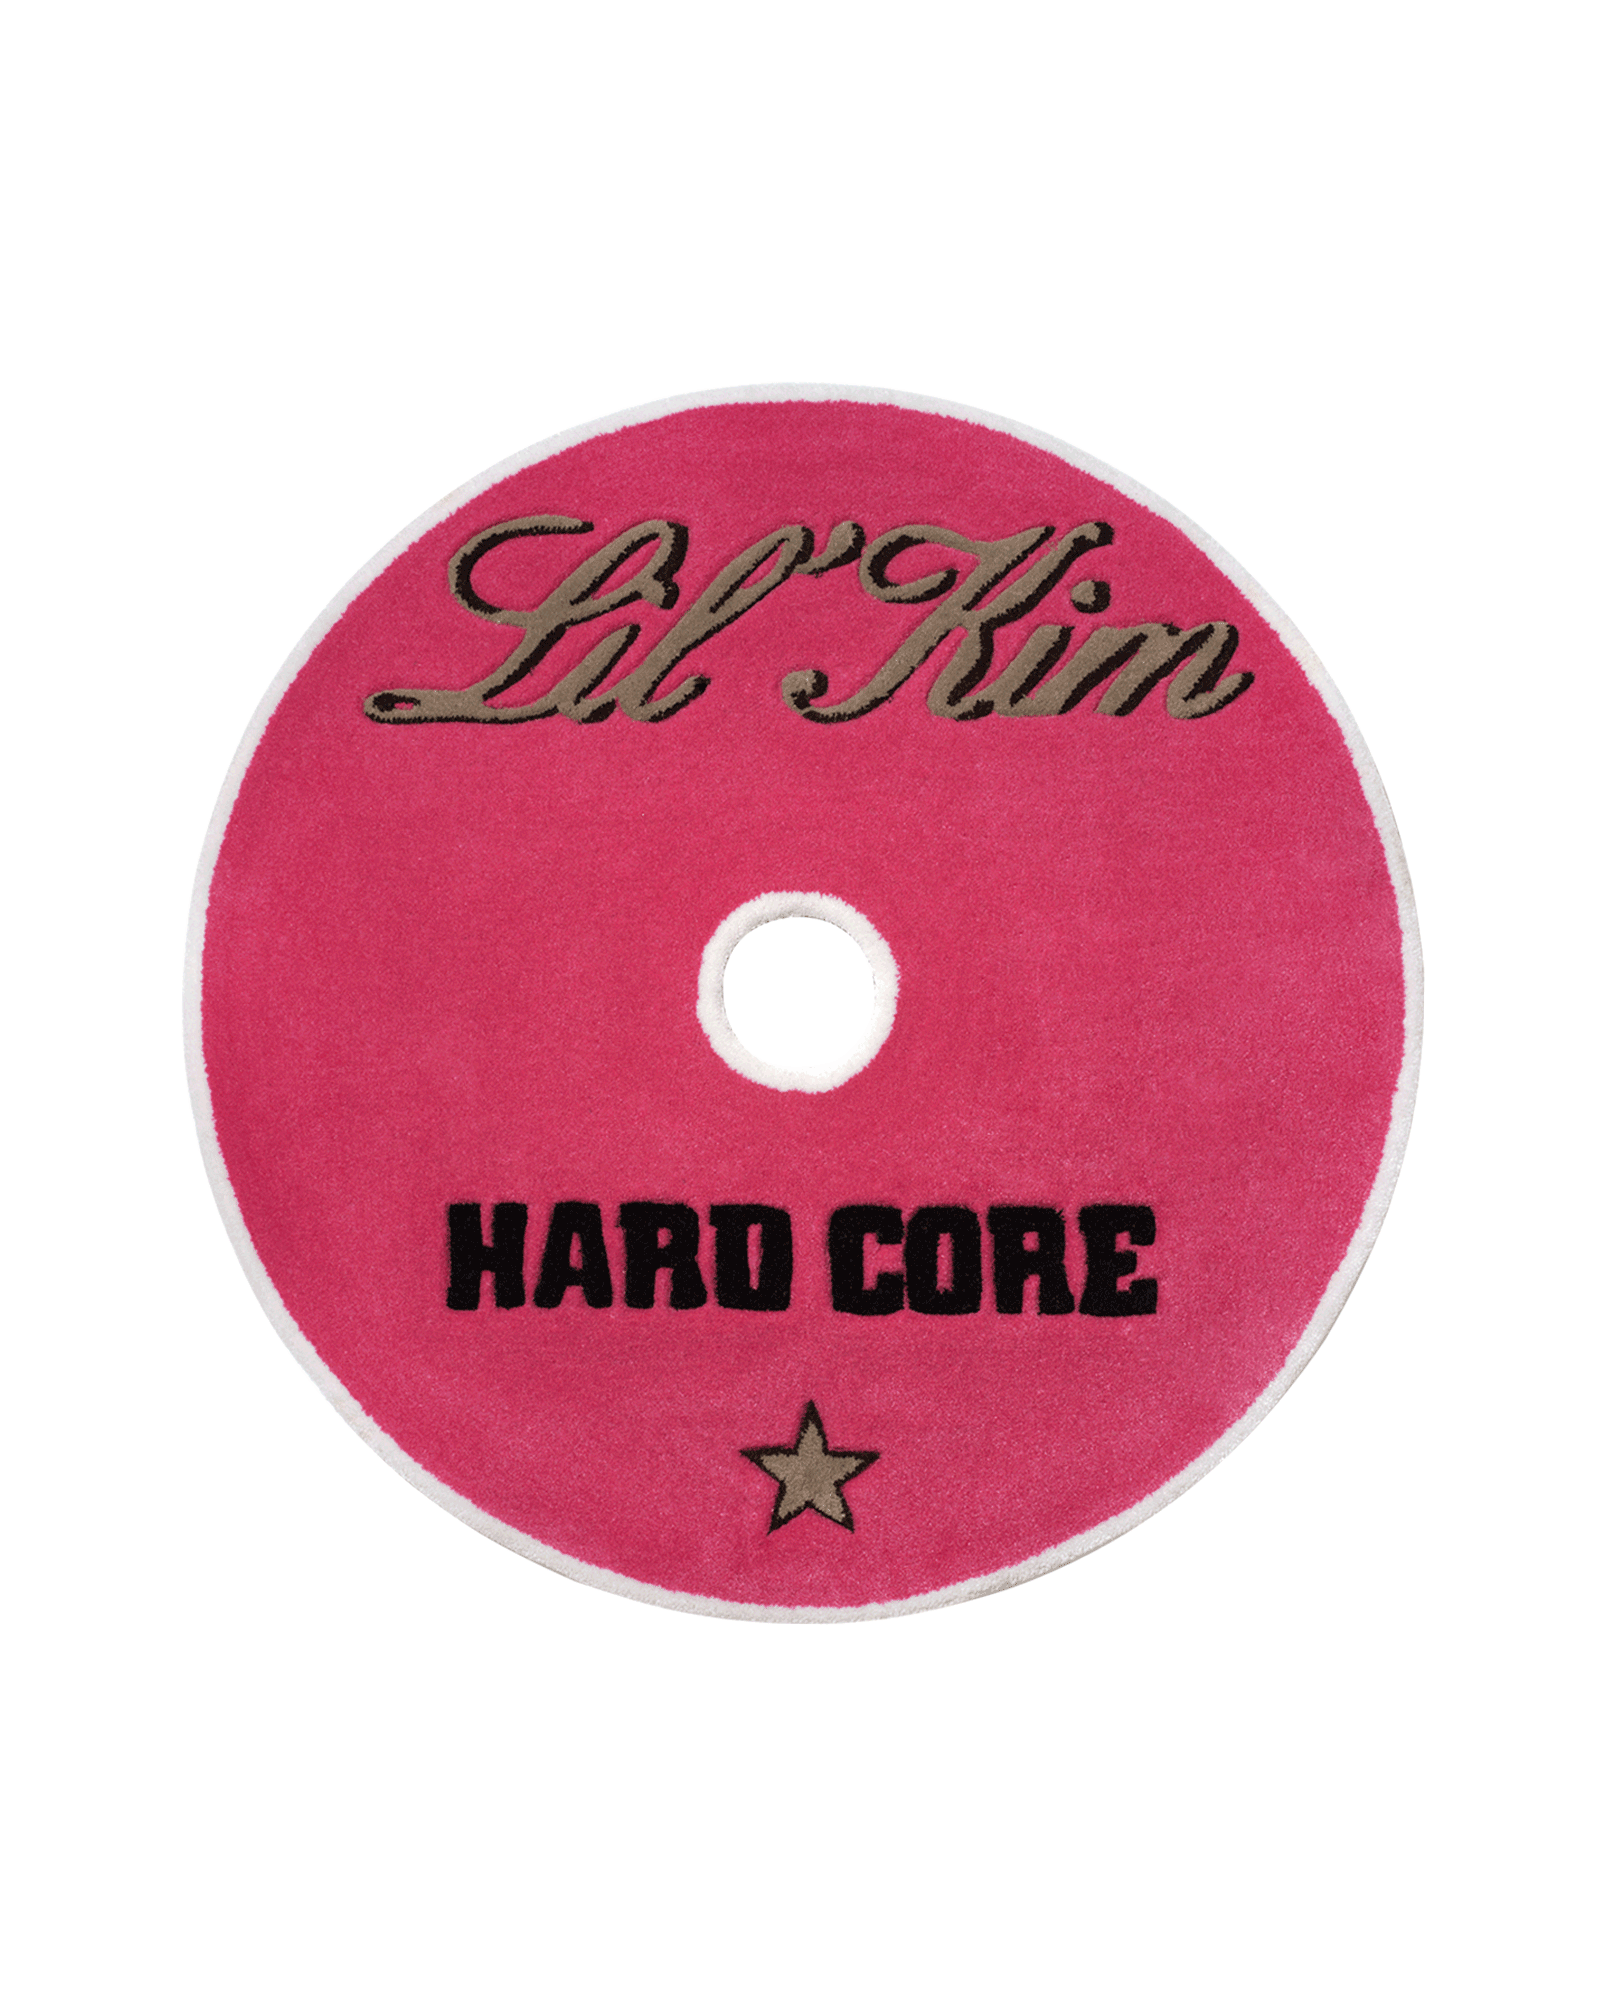 [RENTAL] Handmade CD Rug (Lil Kim / Hardcore)